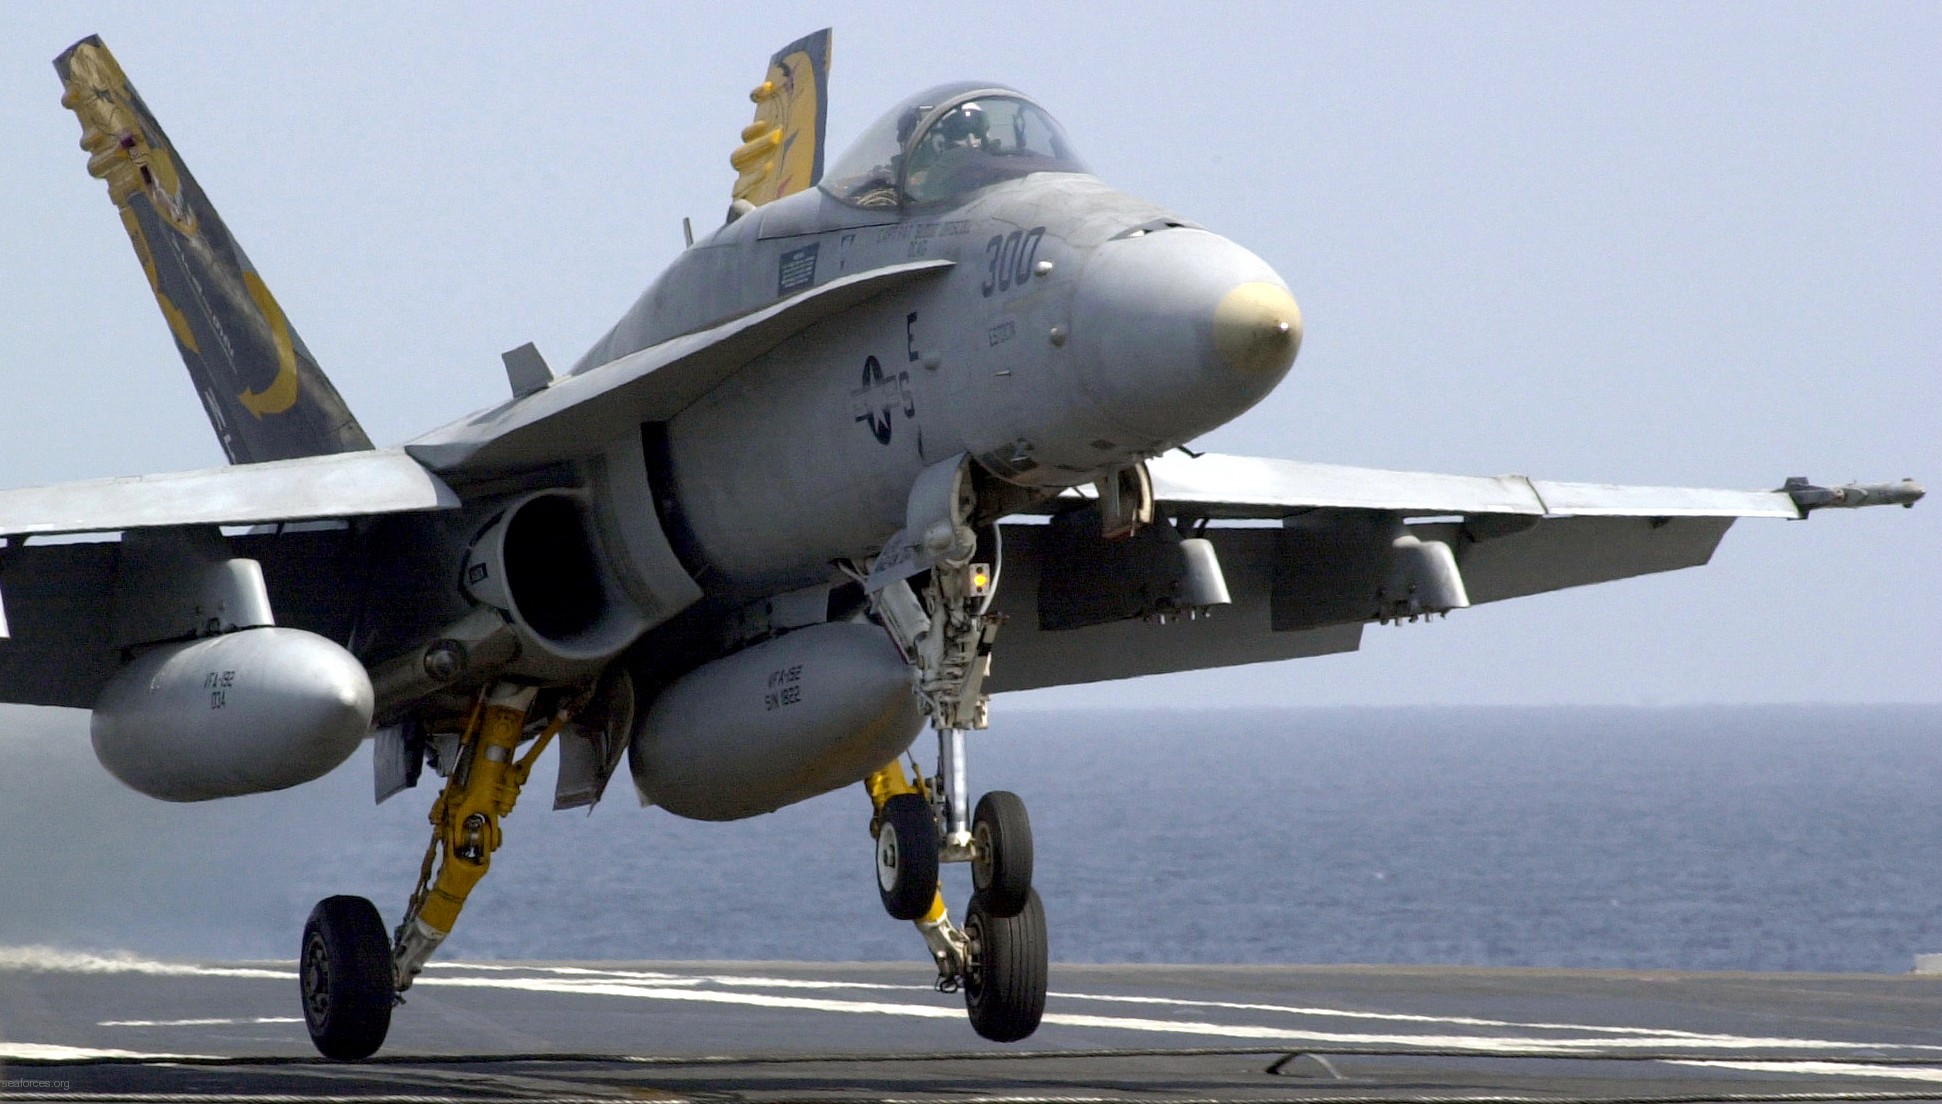 vfa-192 golden dragons strike fighter squadron navy f/a-18c hornet carrier air wing cvw-5 uss kitty hawk cv-63 82